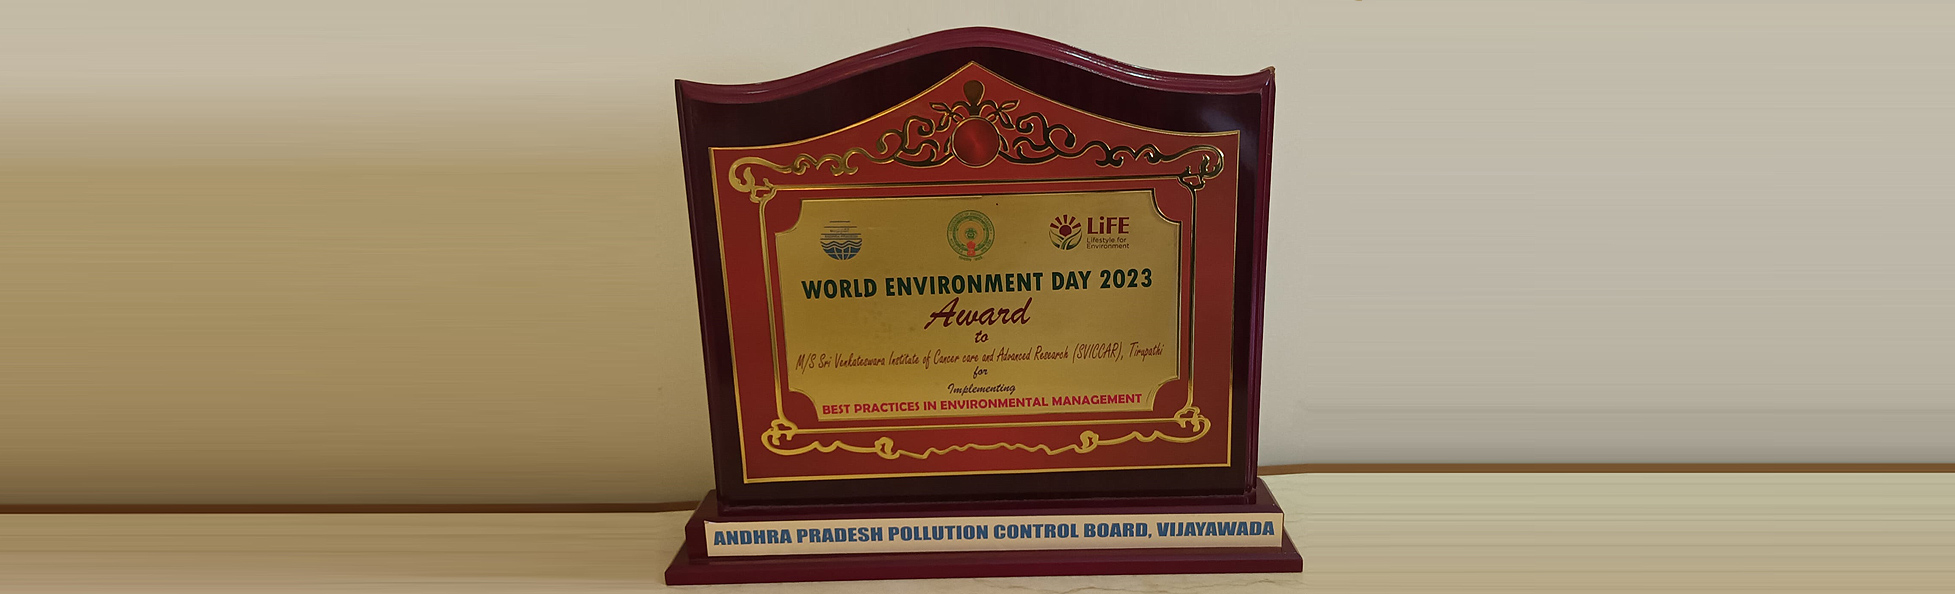 SVICCAR awarded for environment conservation work